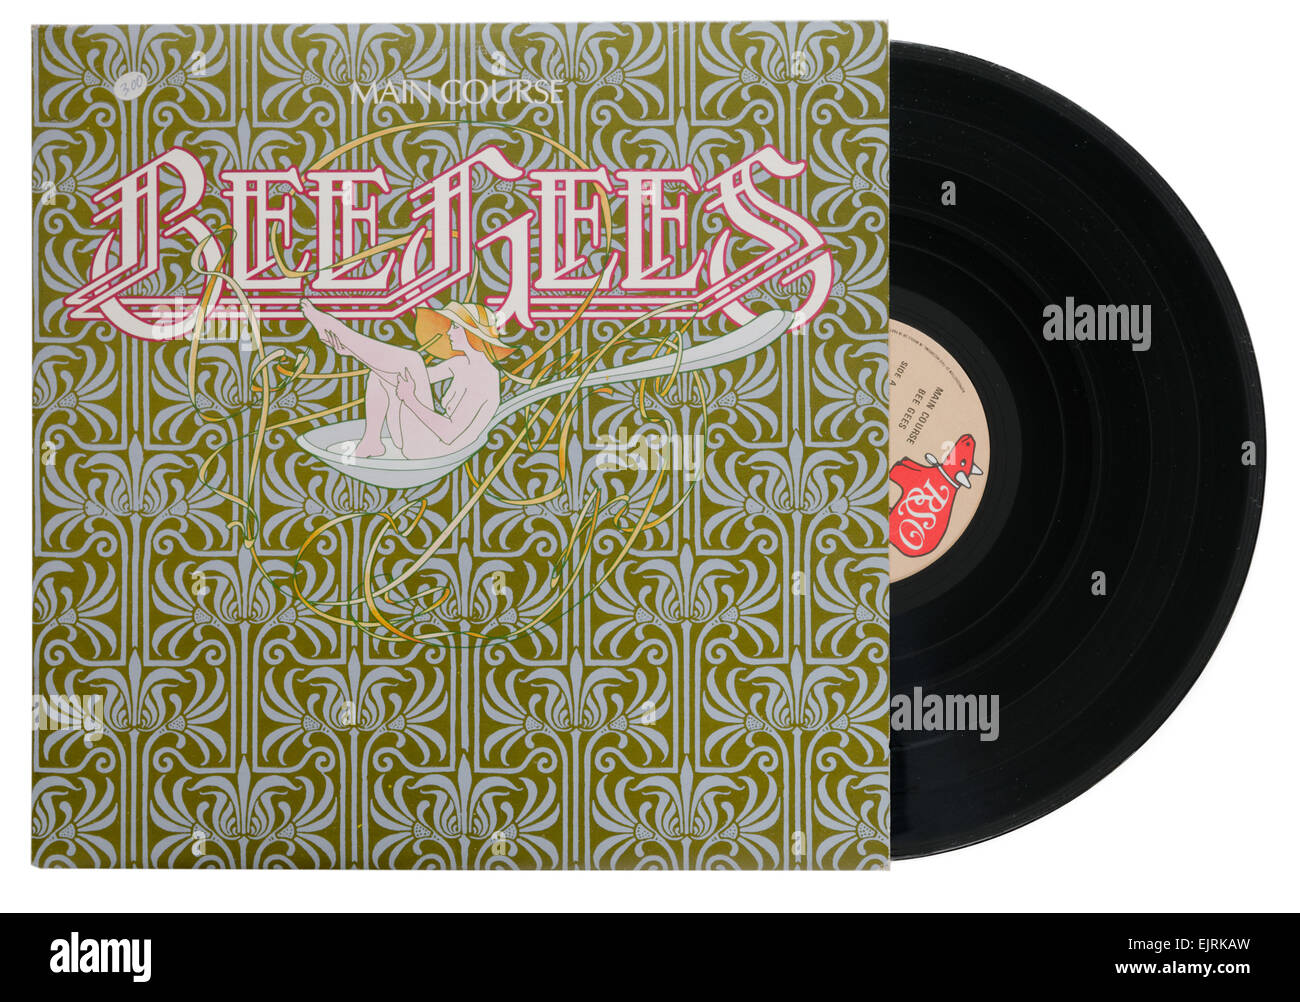 Biene Gees Album Main Course Stockfoto